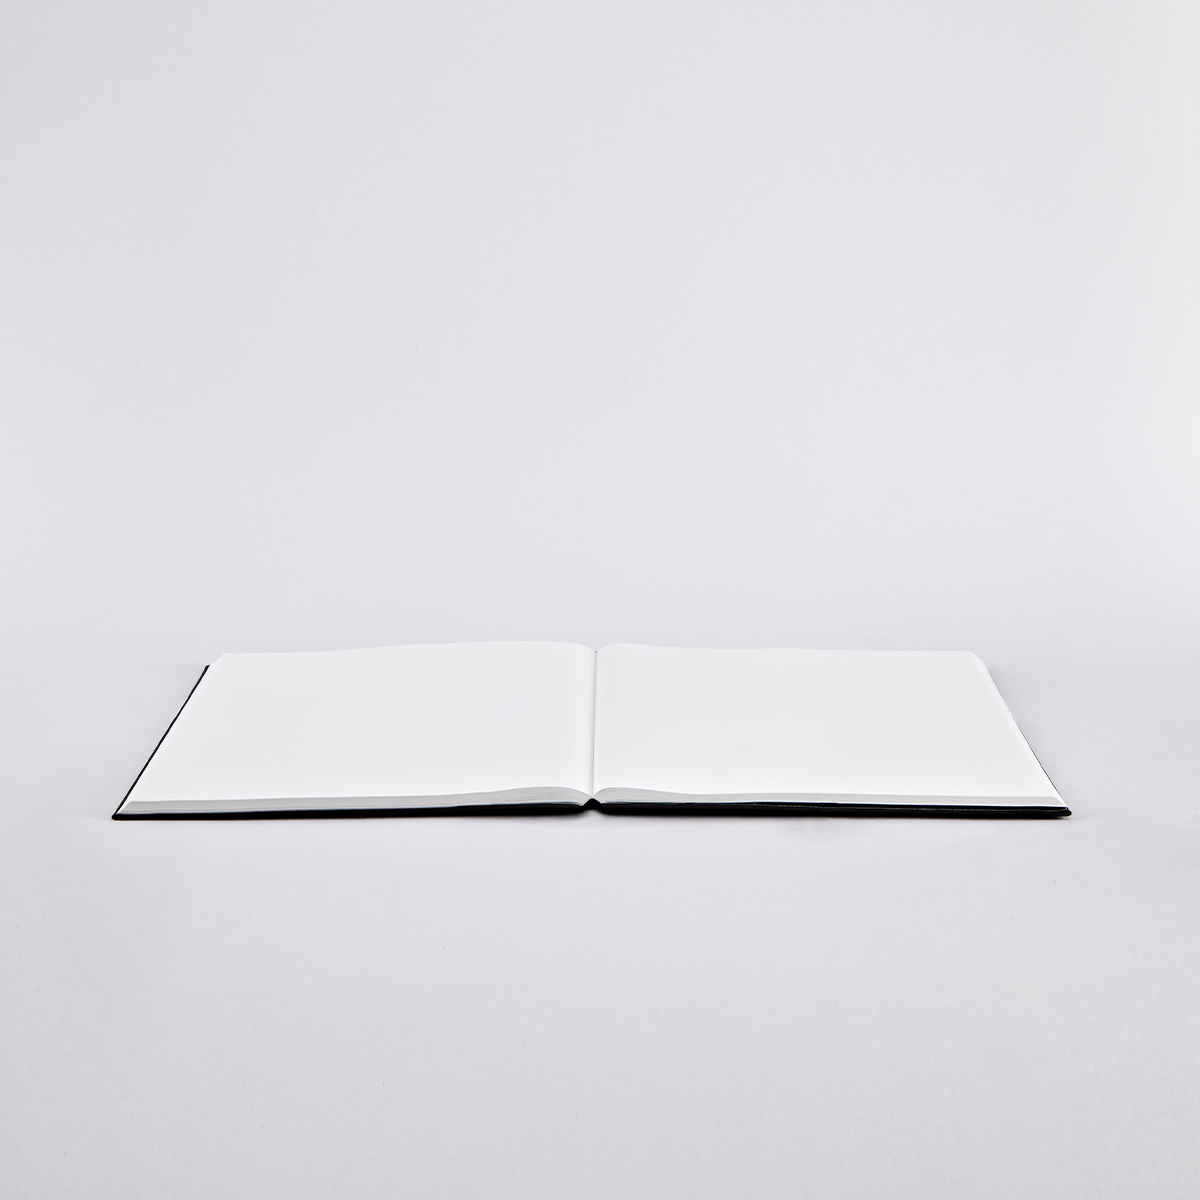 Nuuna Sketchbook Studio XL - EVERYTHING YOU CAN IMAGINE